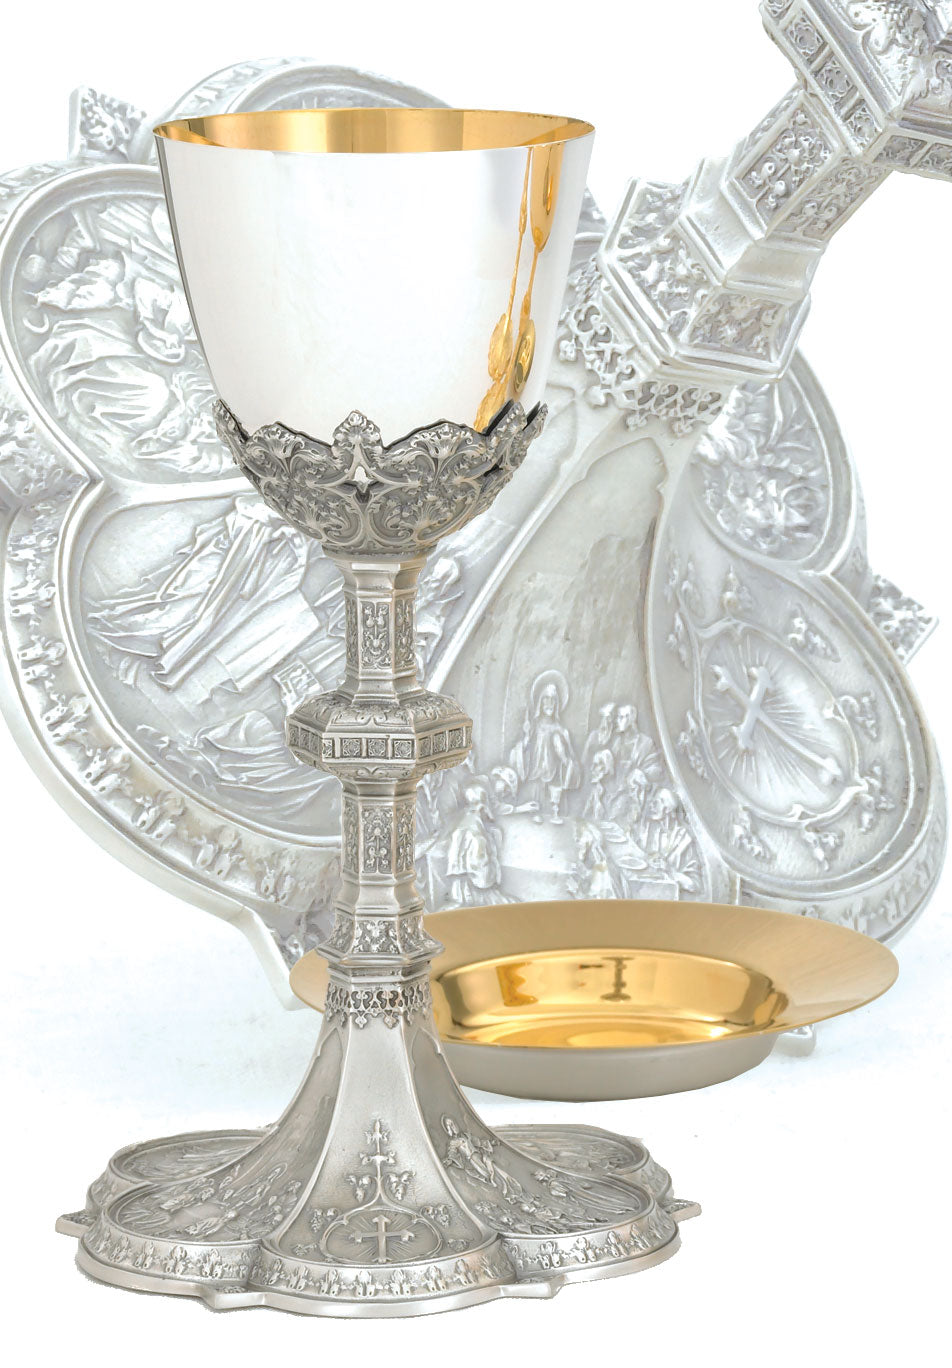 silver-chalice-a8402s.jpg